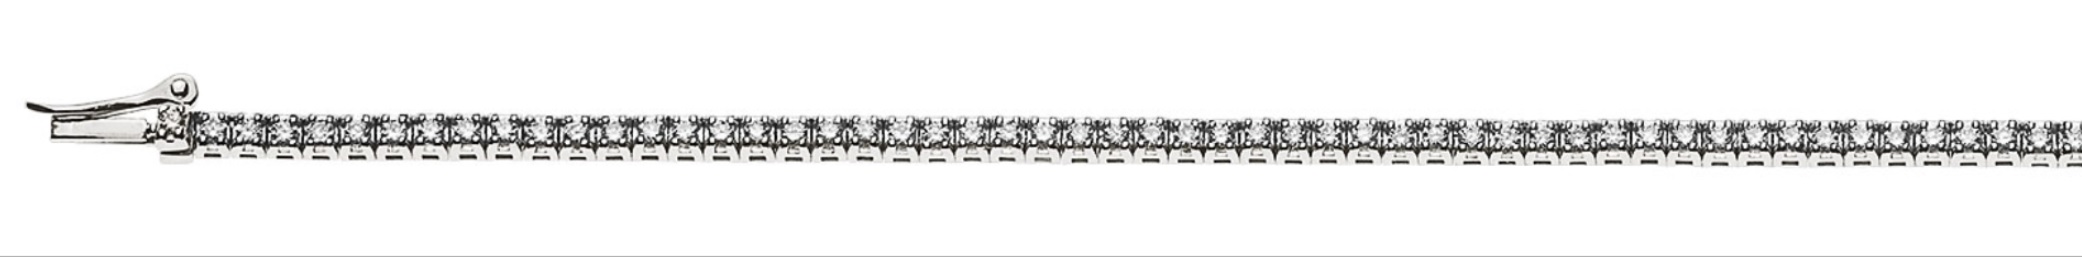 AURONOS Prestige Armband 18K Weissgold 123 Diamanten 0.59ct 17cm